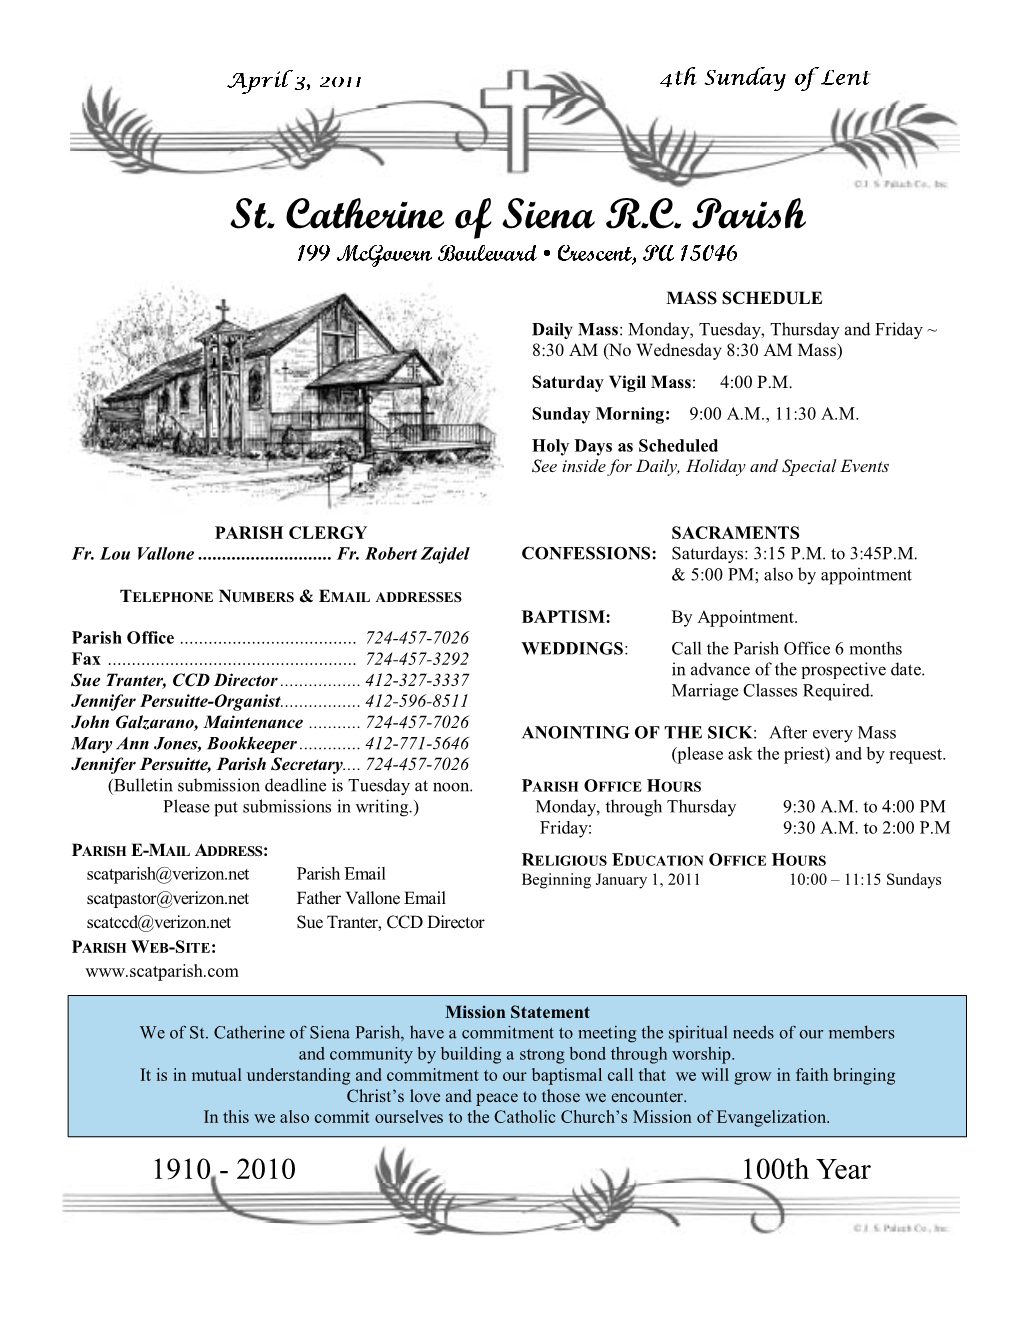 St. Catherine of Siena R.C. Parish 199 Mcgovern Boulevard • Crescent, PA 15046